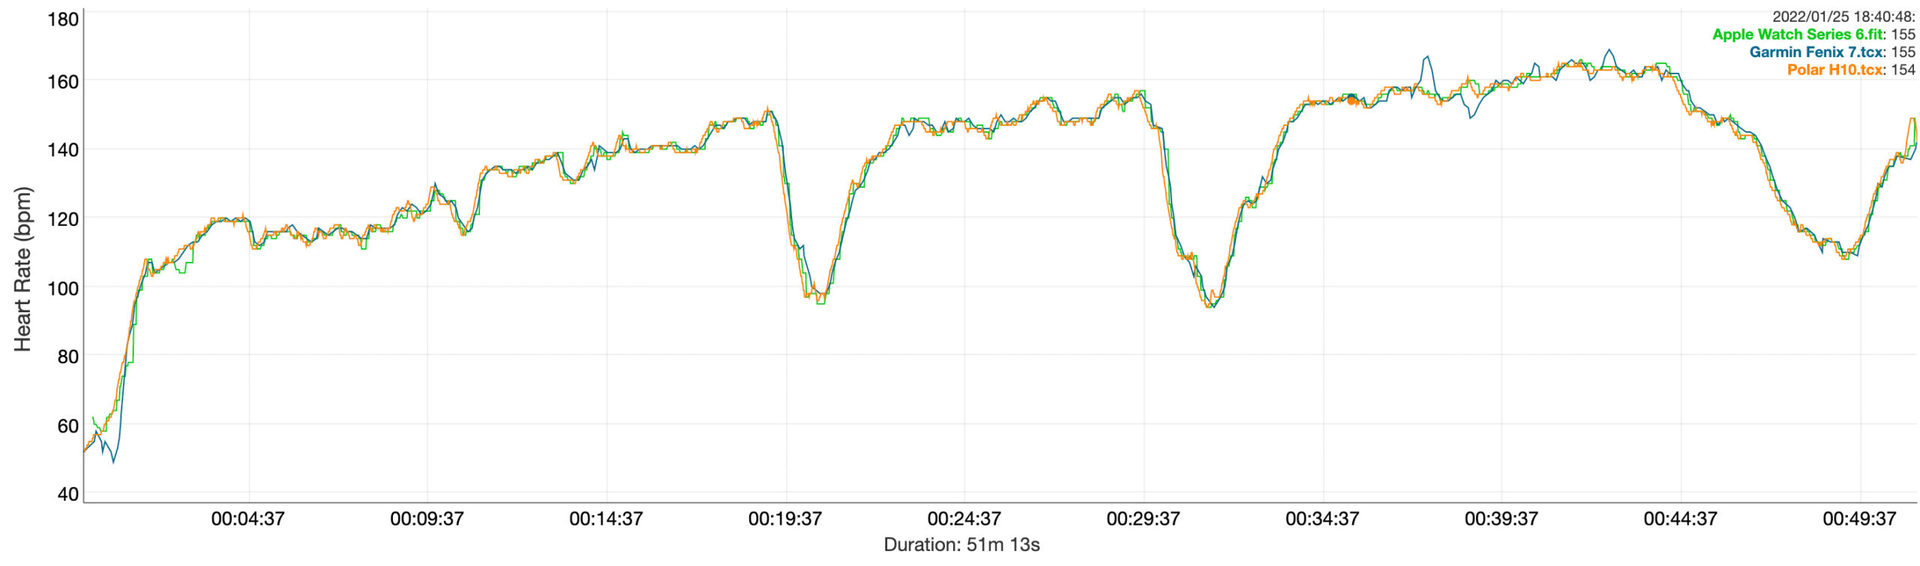 Garmin Fenix 7 vs Polar H10 vs Apple Watch Series 6 heart rate data treadmill run